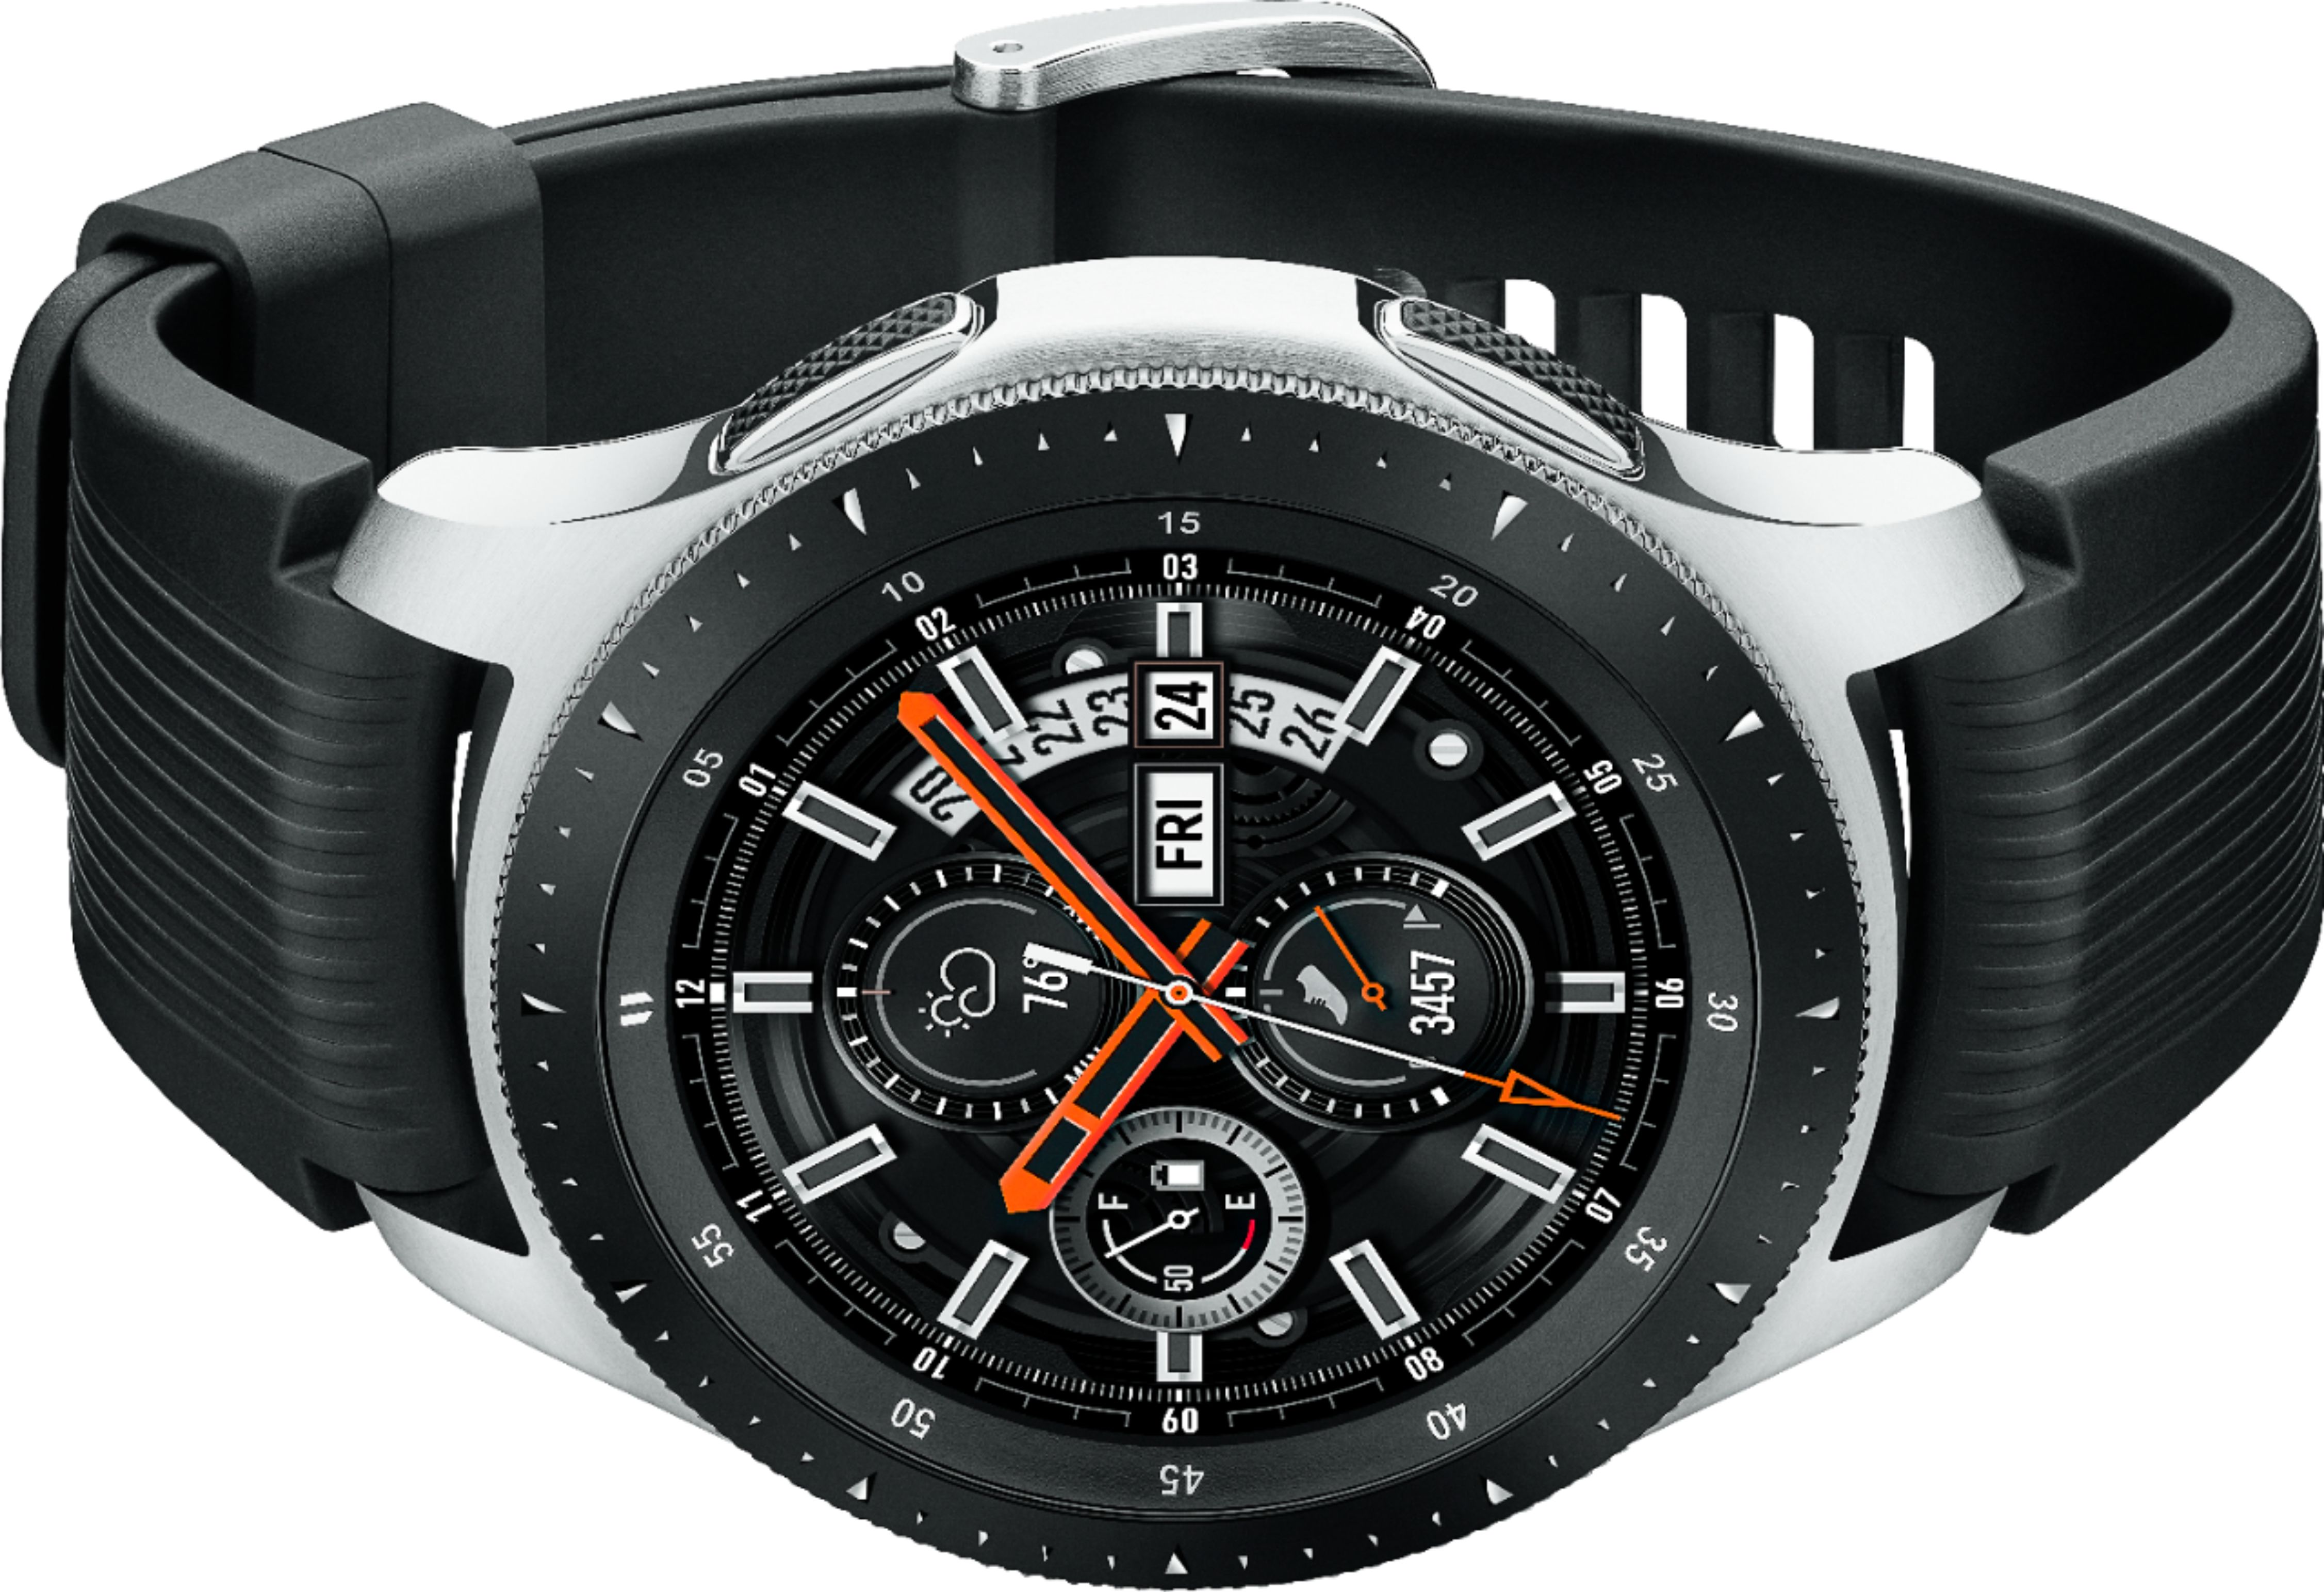 Customer Reviews: Samsung Galaxy Watch Smartwatch 46mm Stainless Steel